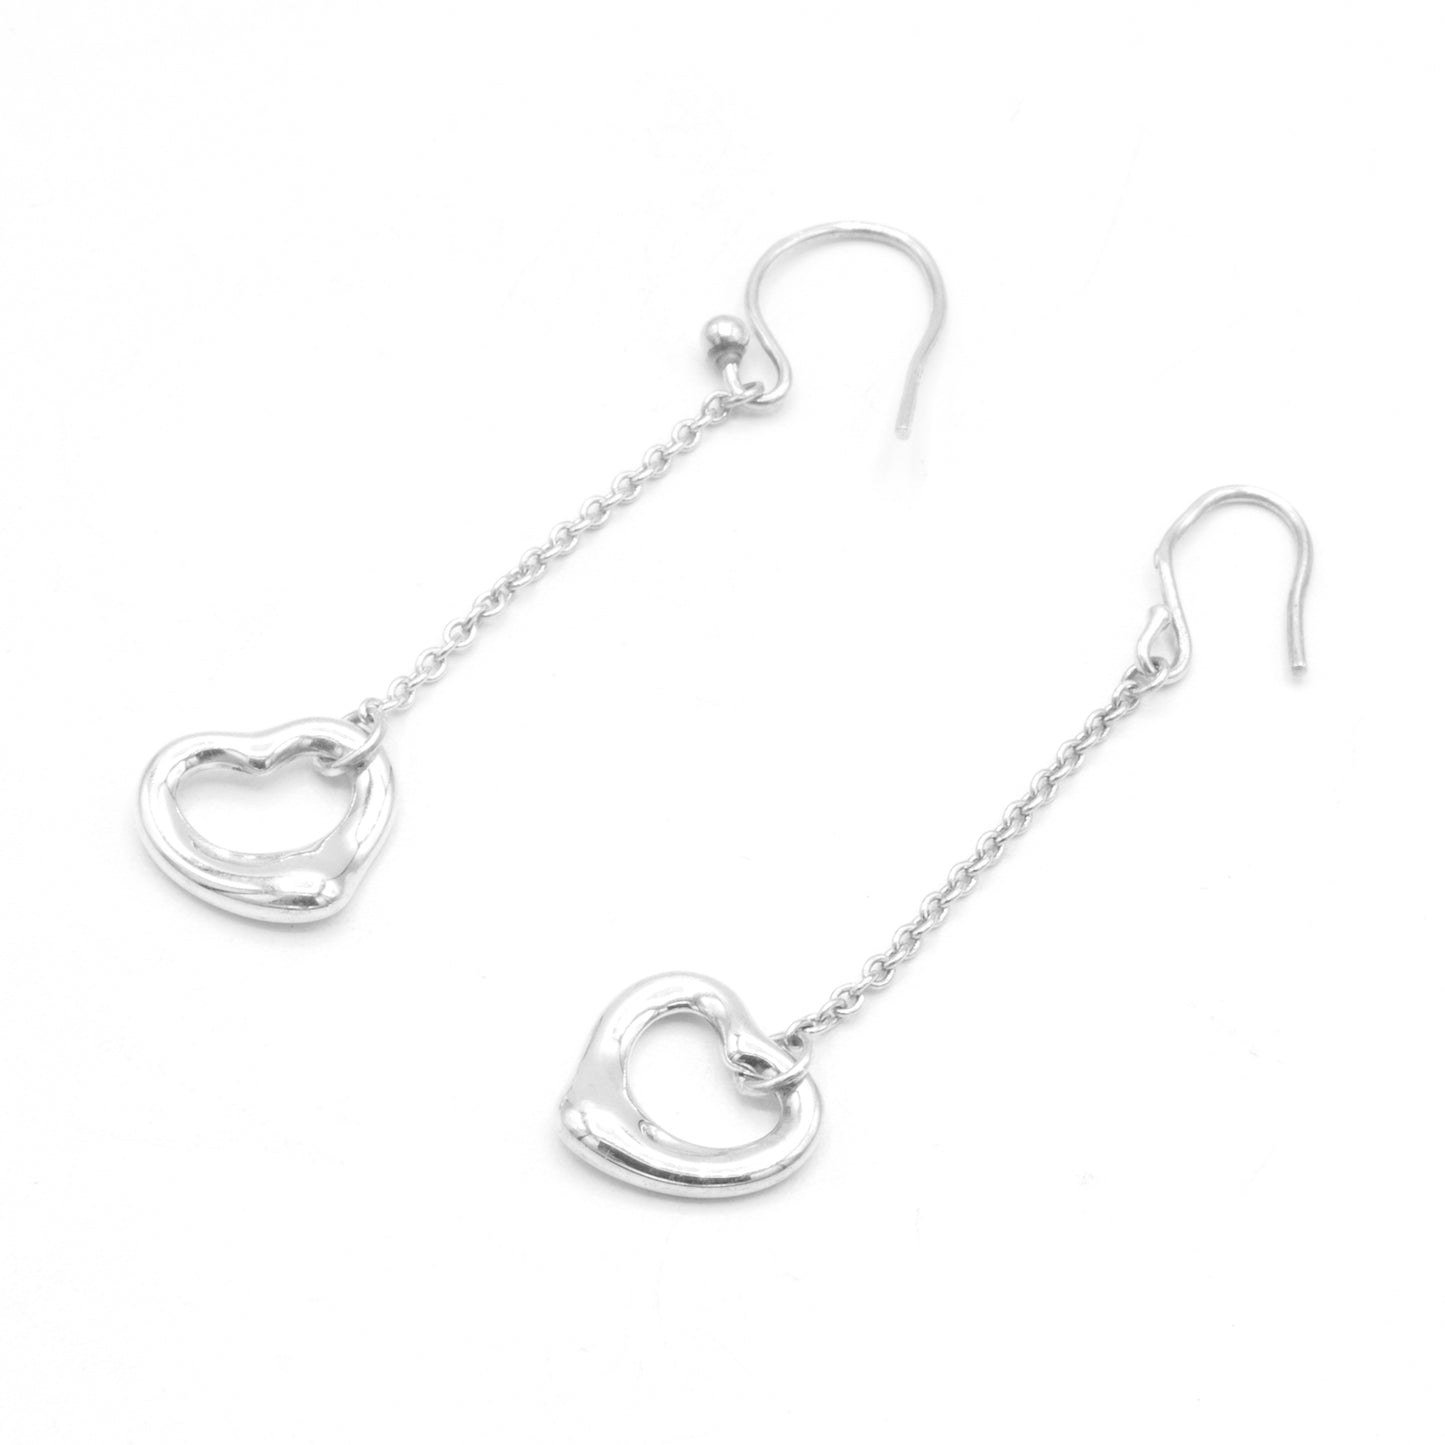 Tiffany & Co Elsa Peretti earrings